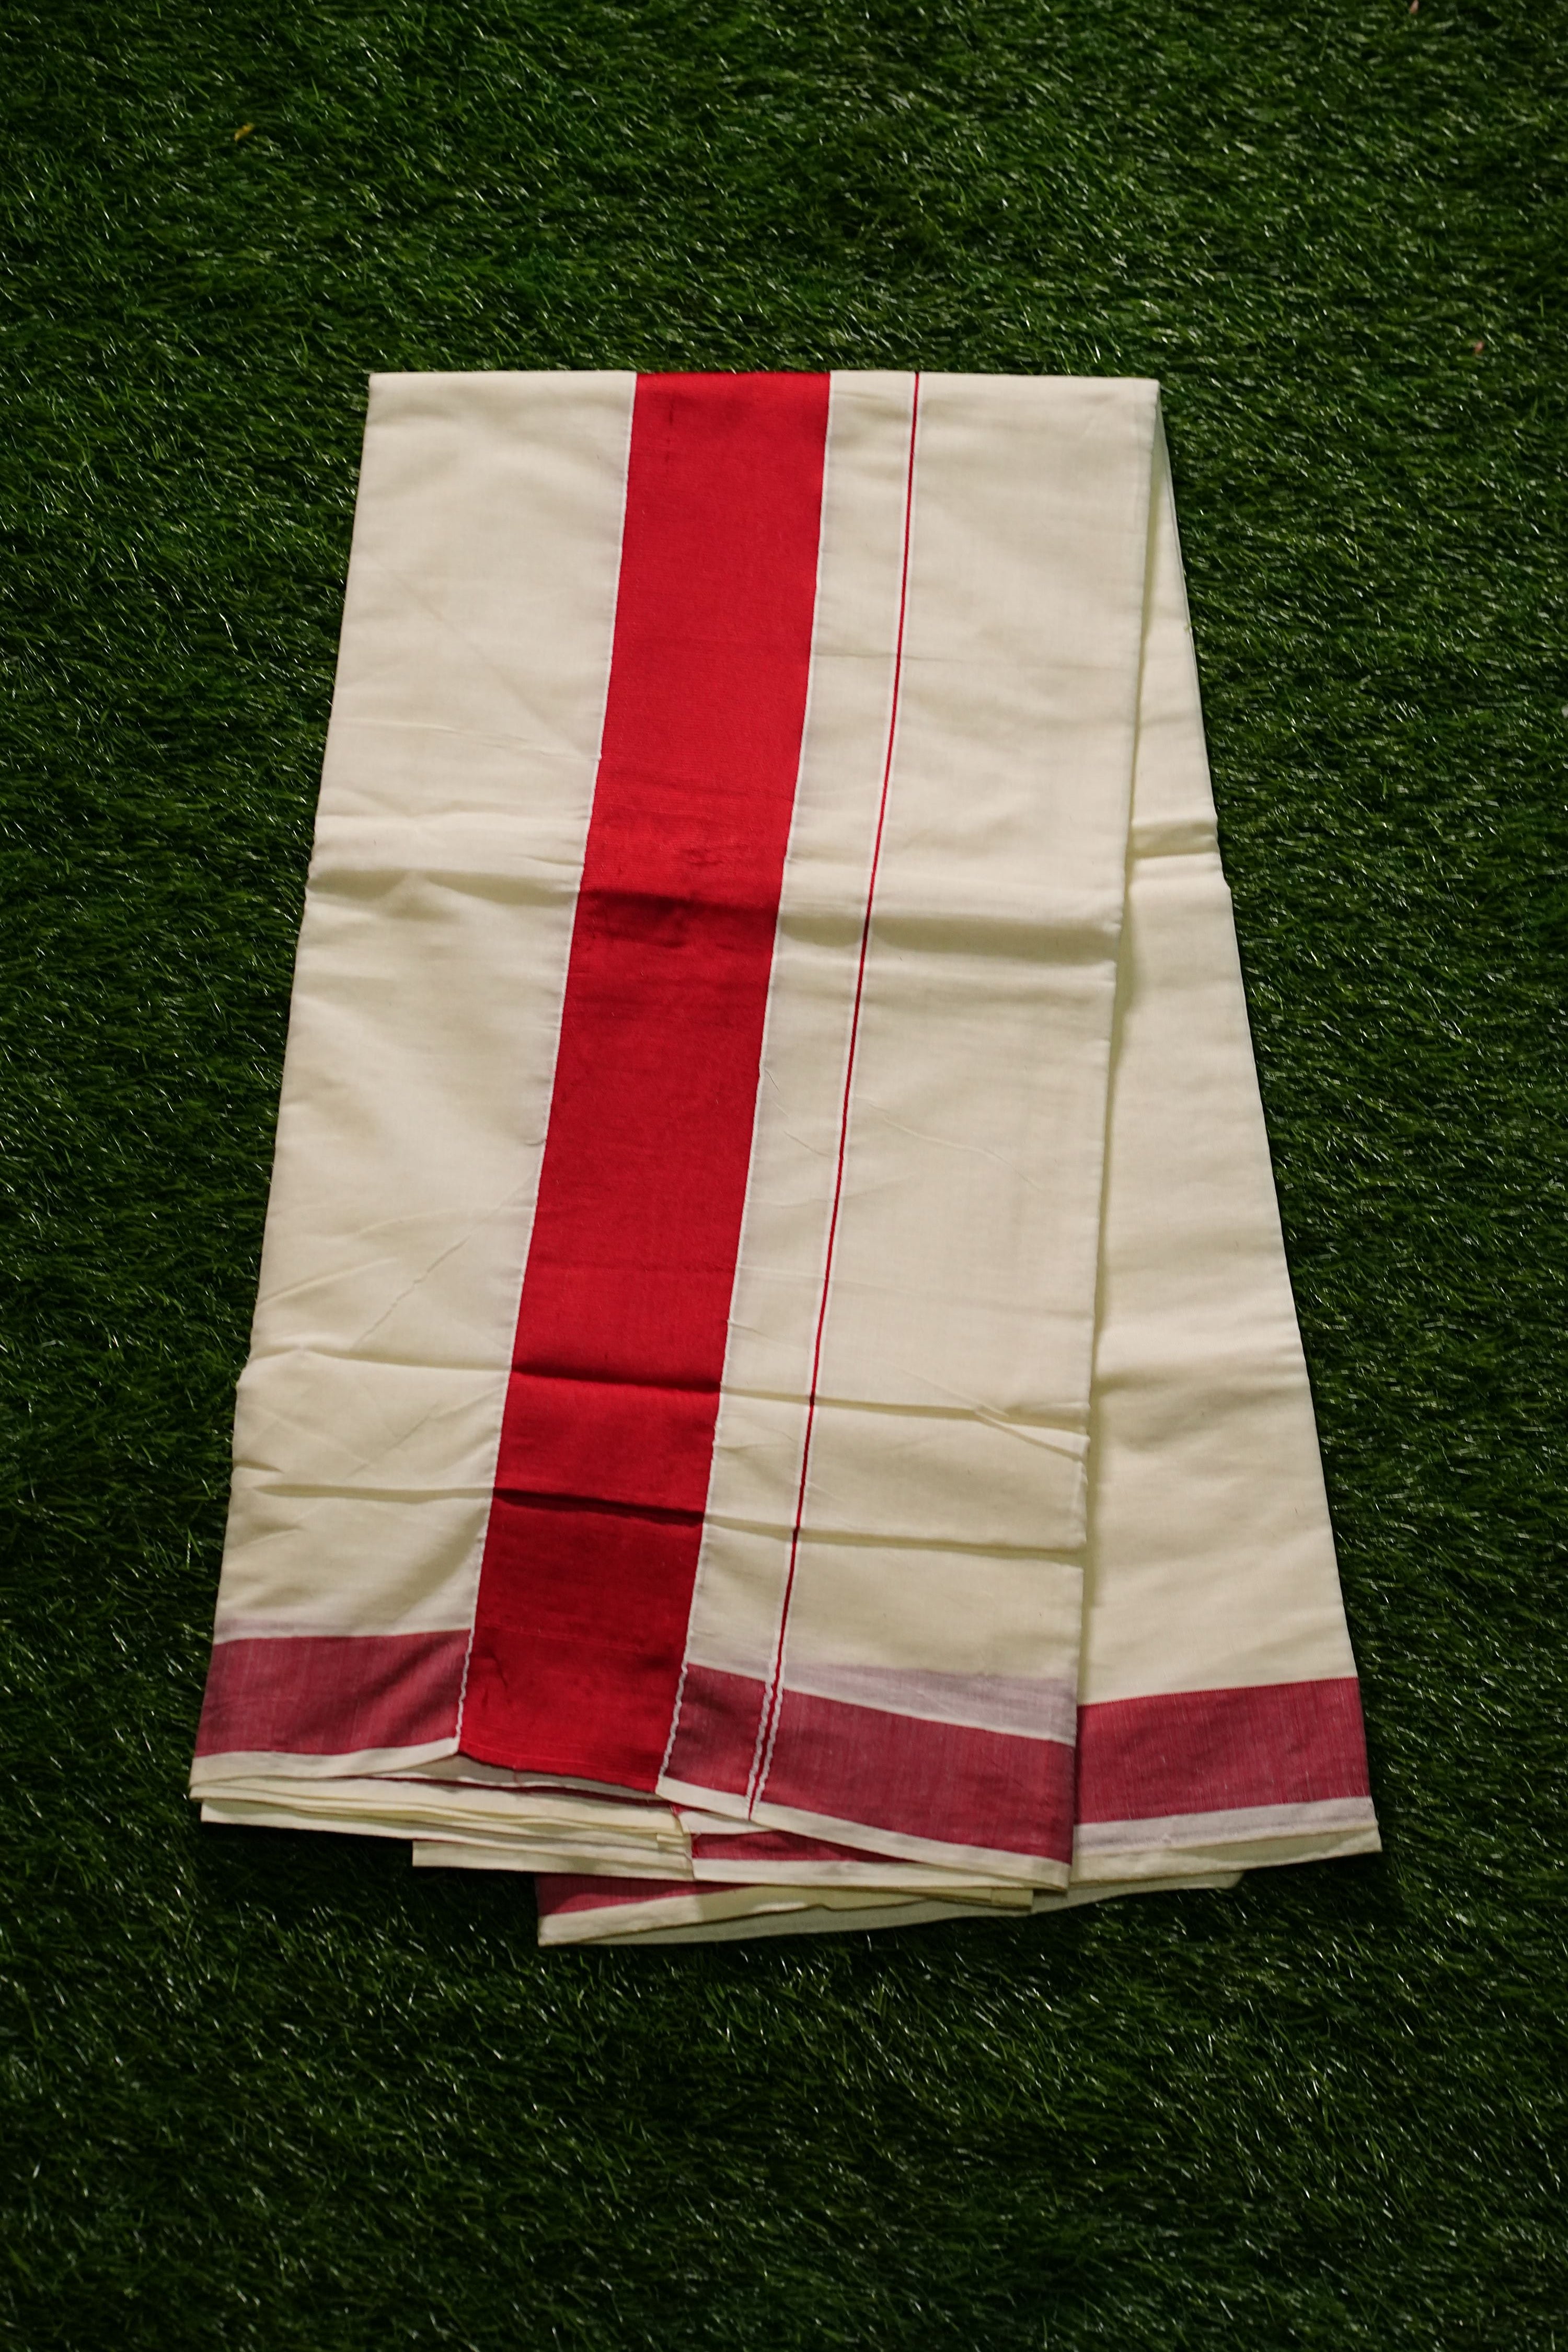 Kerala Cotton Set Saree with 3 inch katti kara border -2428